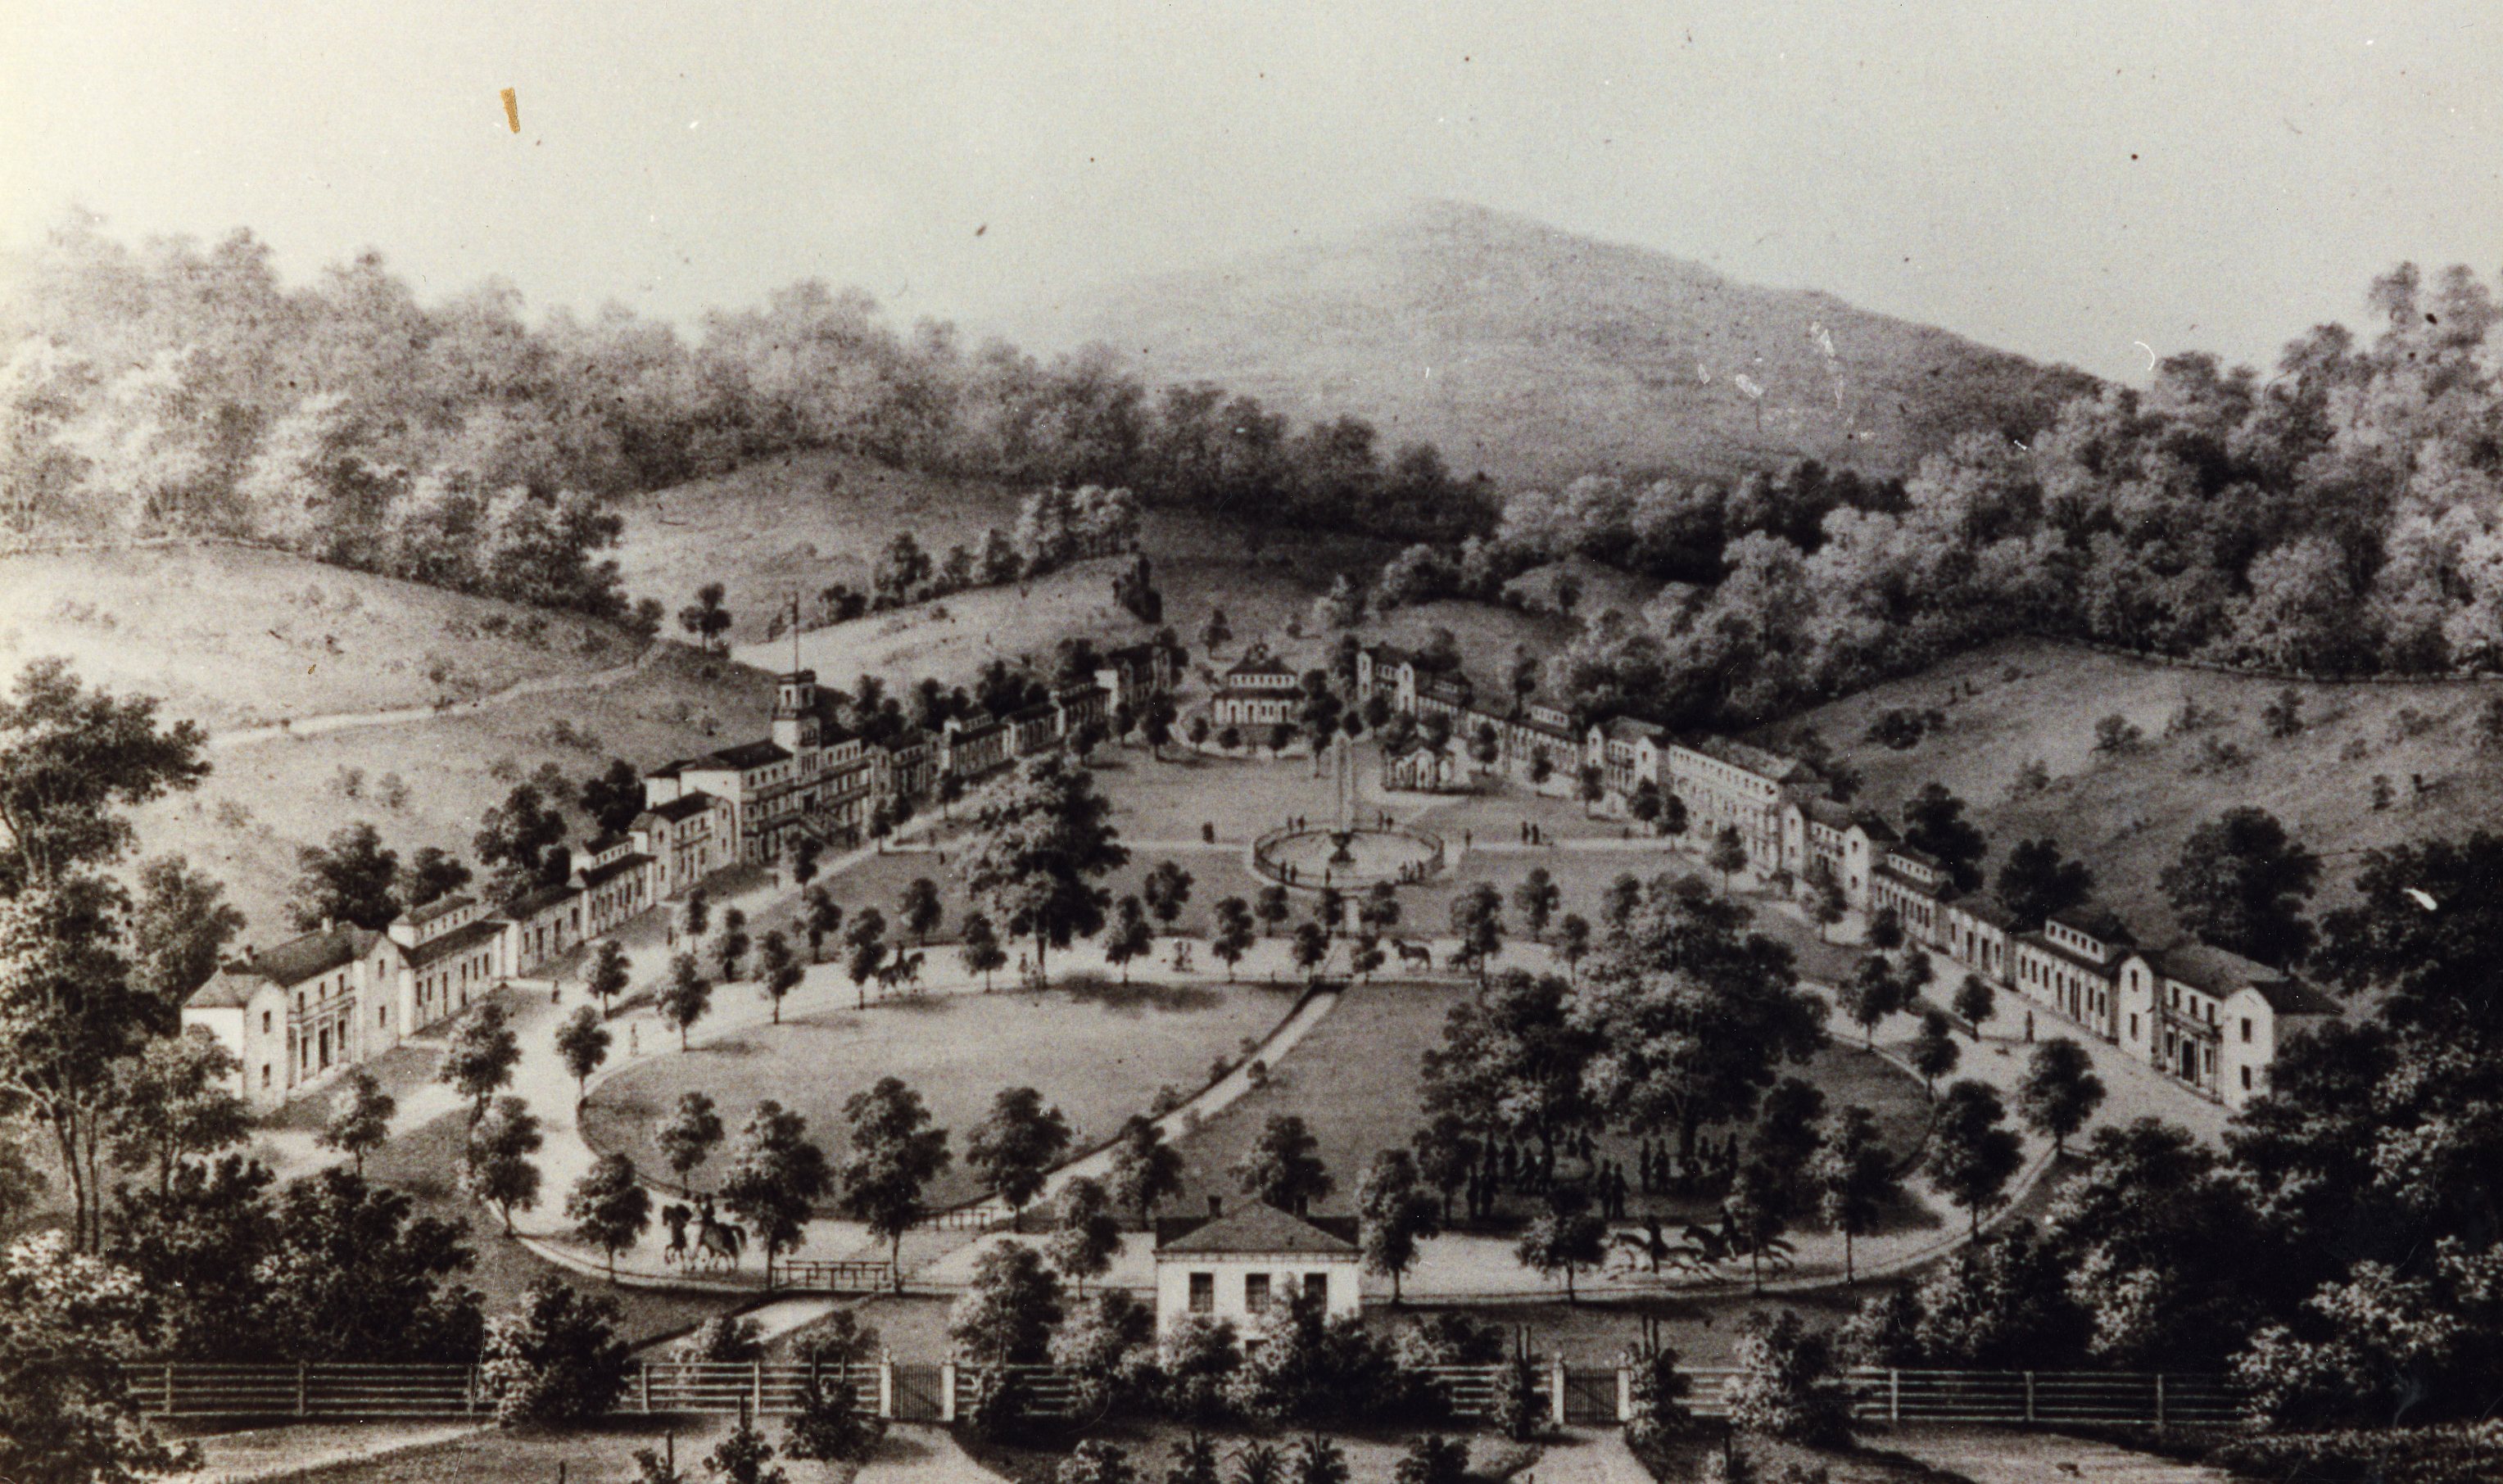 Edward Beyer's Sketch of the Montgomery White Sulphur Springs resort, as planned in 1853.